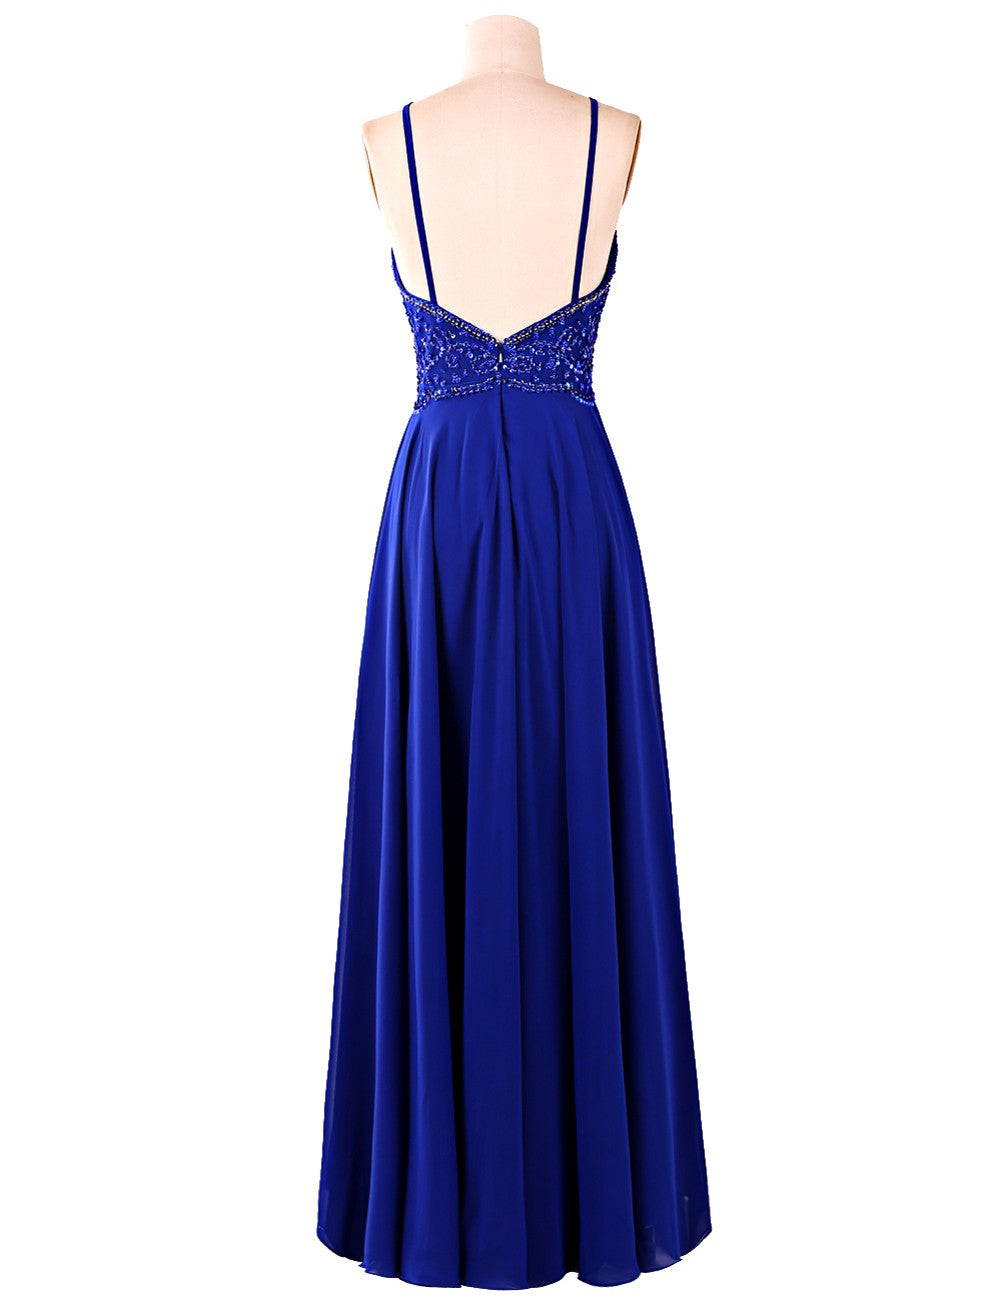 Royal Blue Prom Dress, Evening Gown, Graduation School Party Dress, Winter Formal Dress